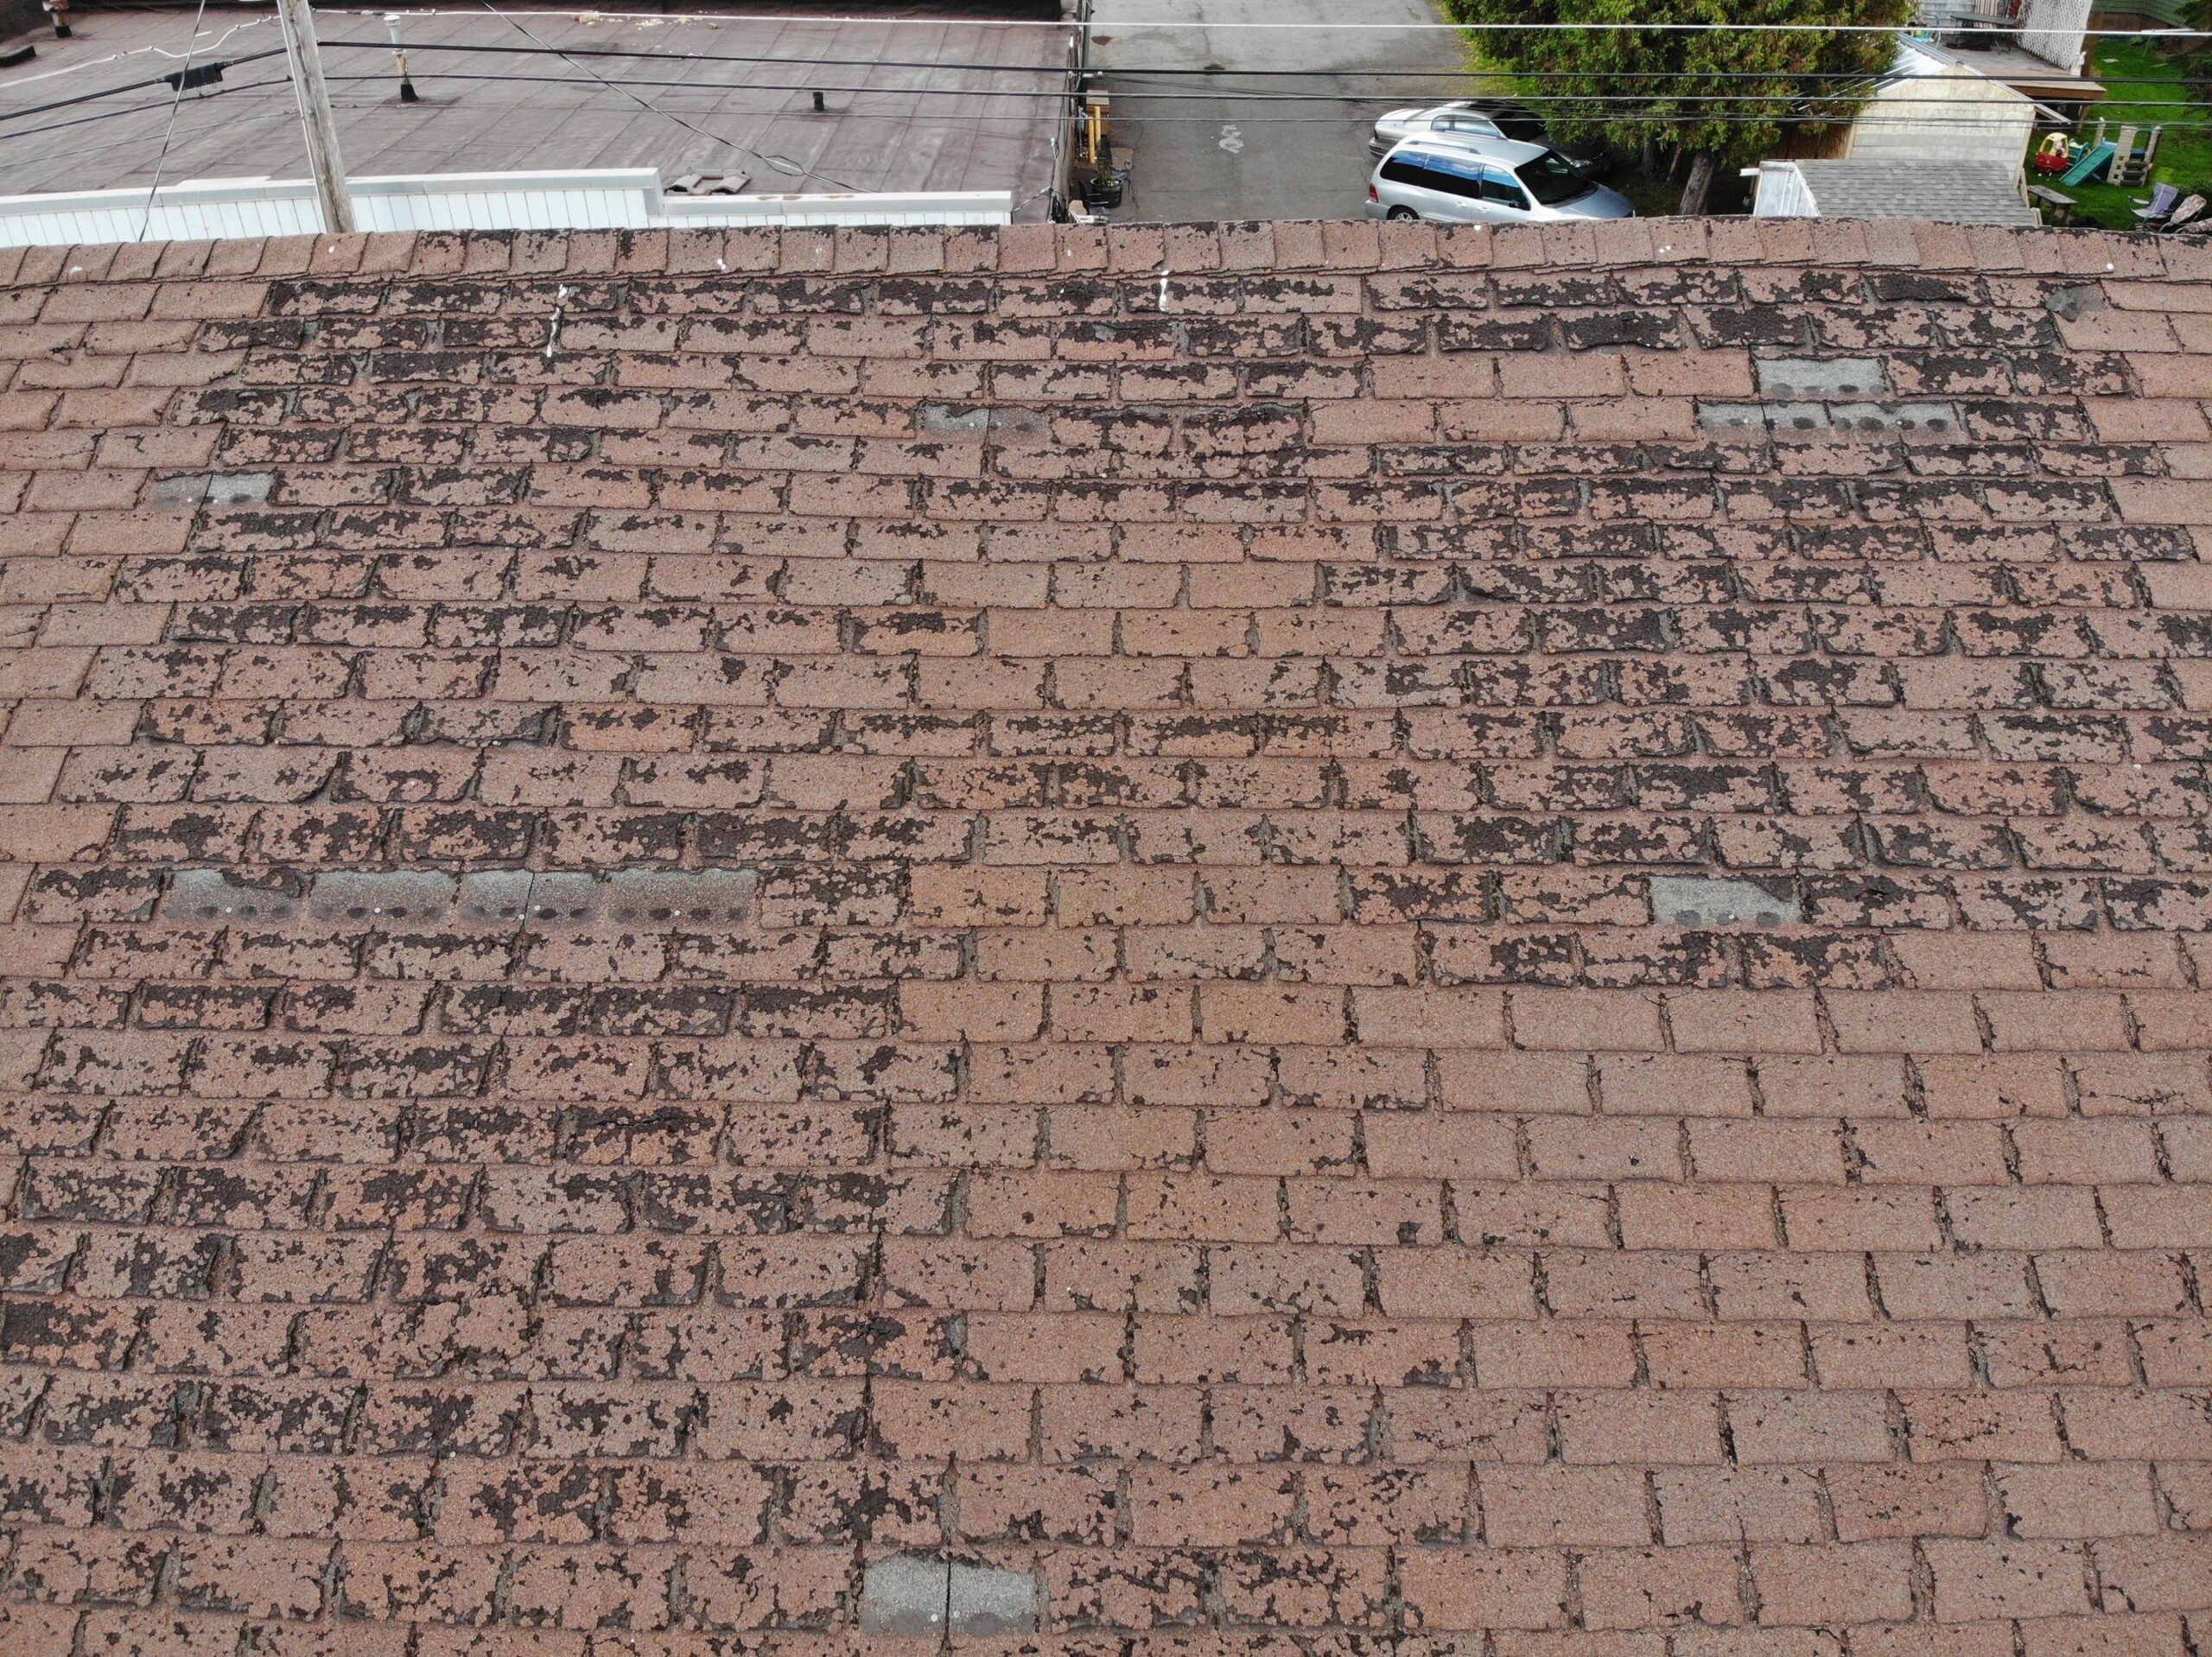 Roof inspection after Storm Damage